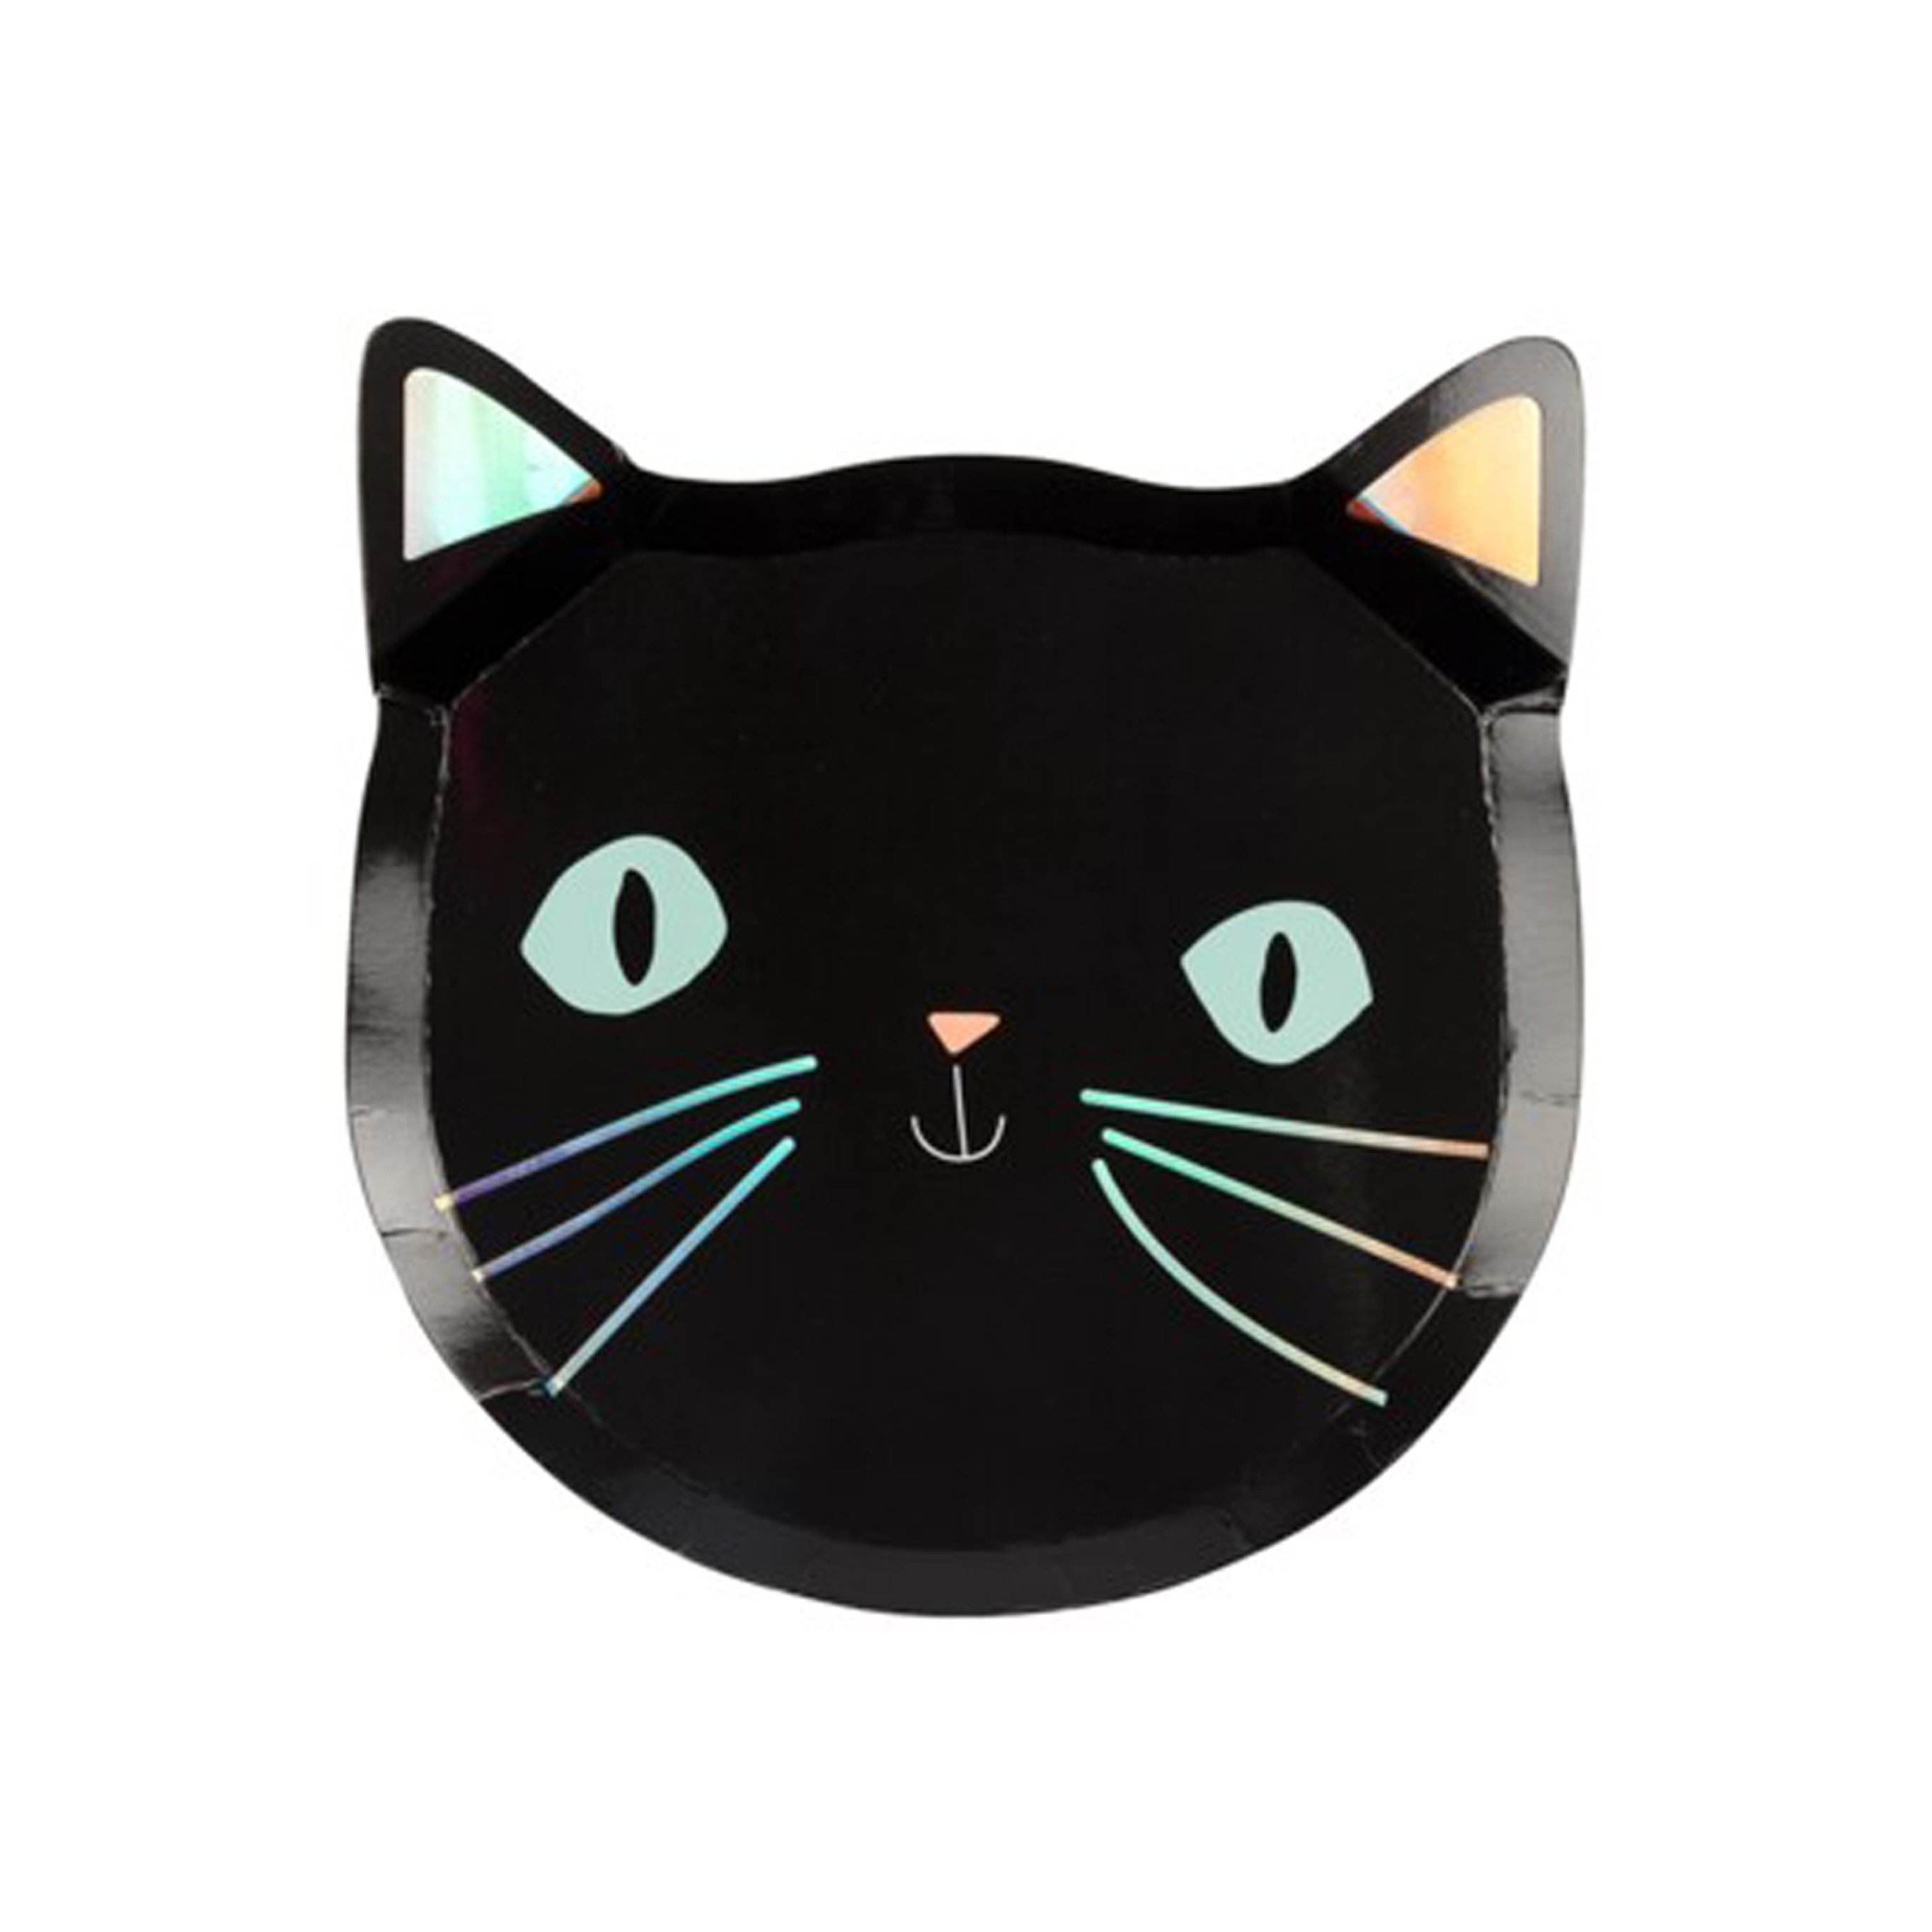 BUY ME / NEW ITEM $9.99 each Black Cat Paper Plates - 8 Pack